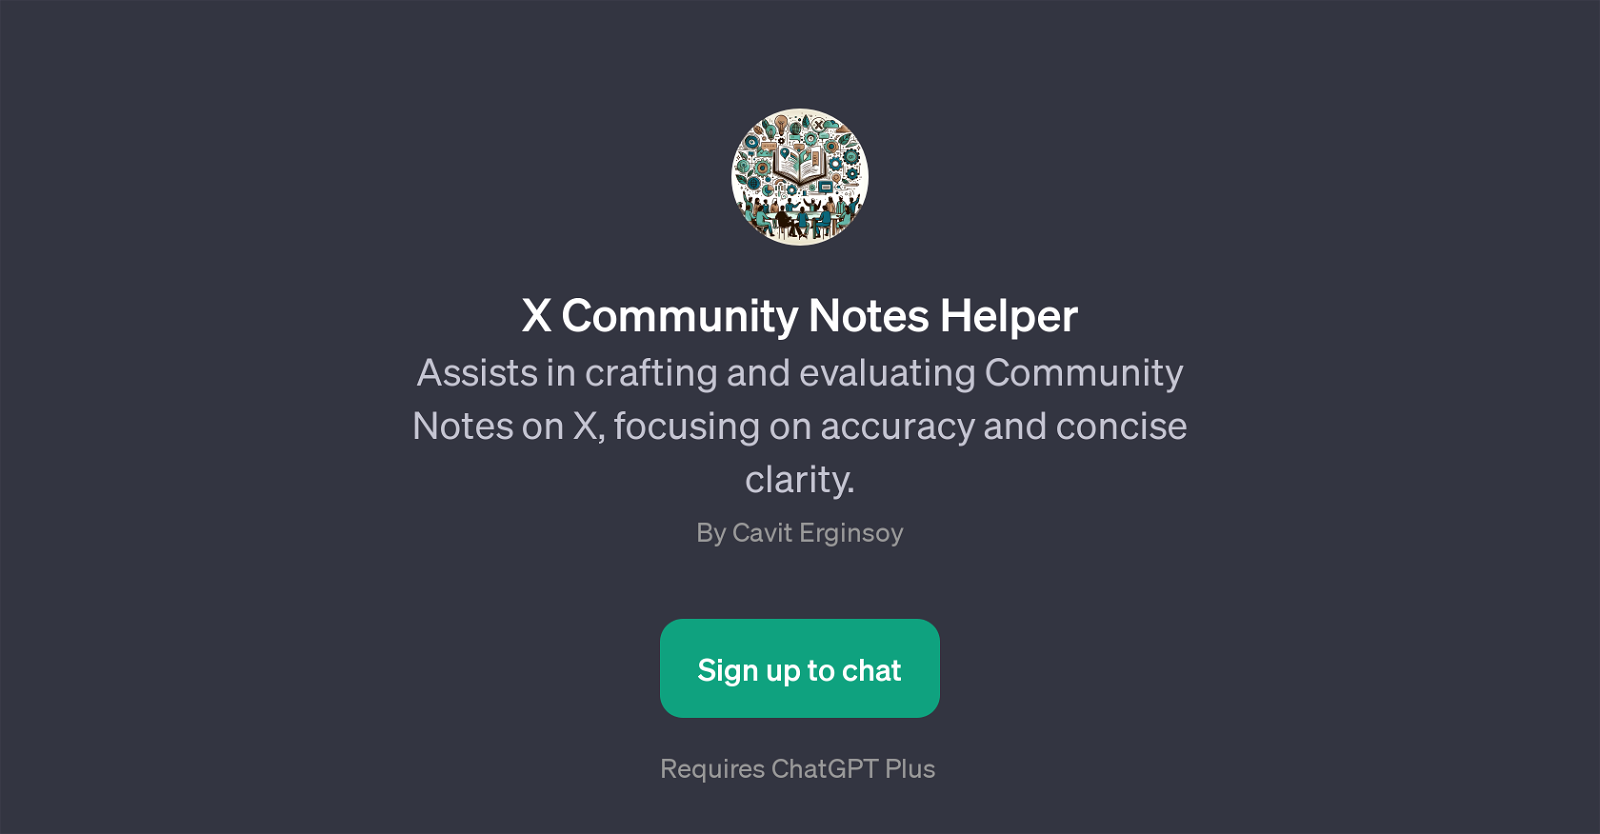 X Community Notes Helper website